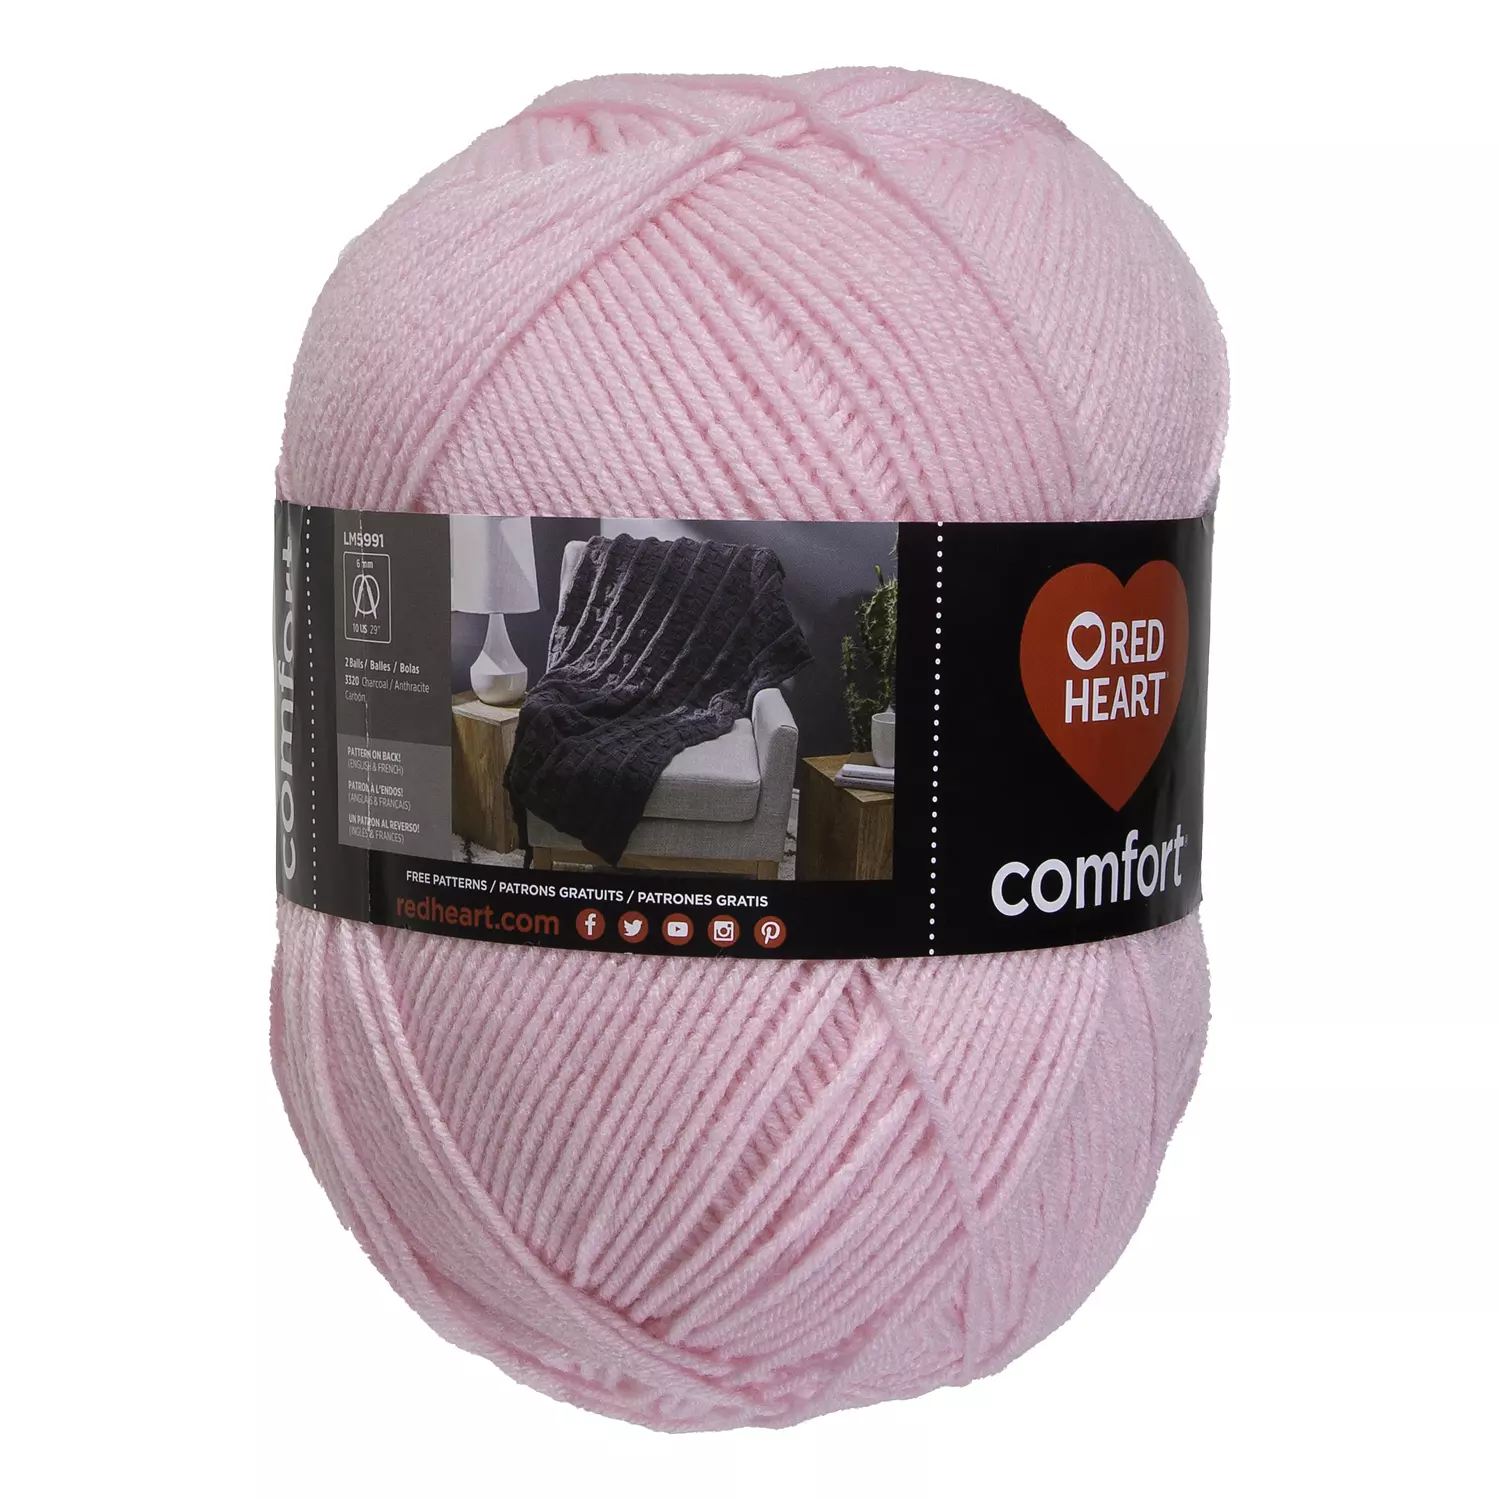 Red Heart Comfort - Yarn, light pink